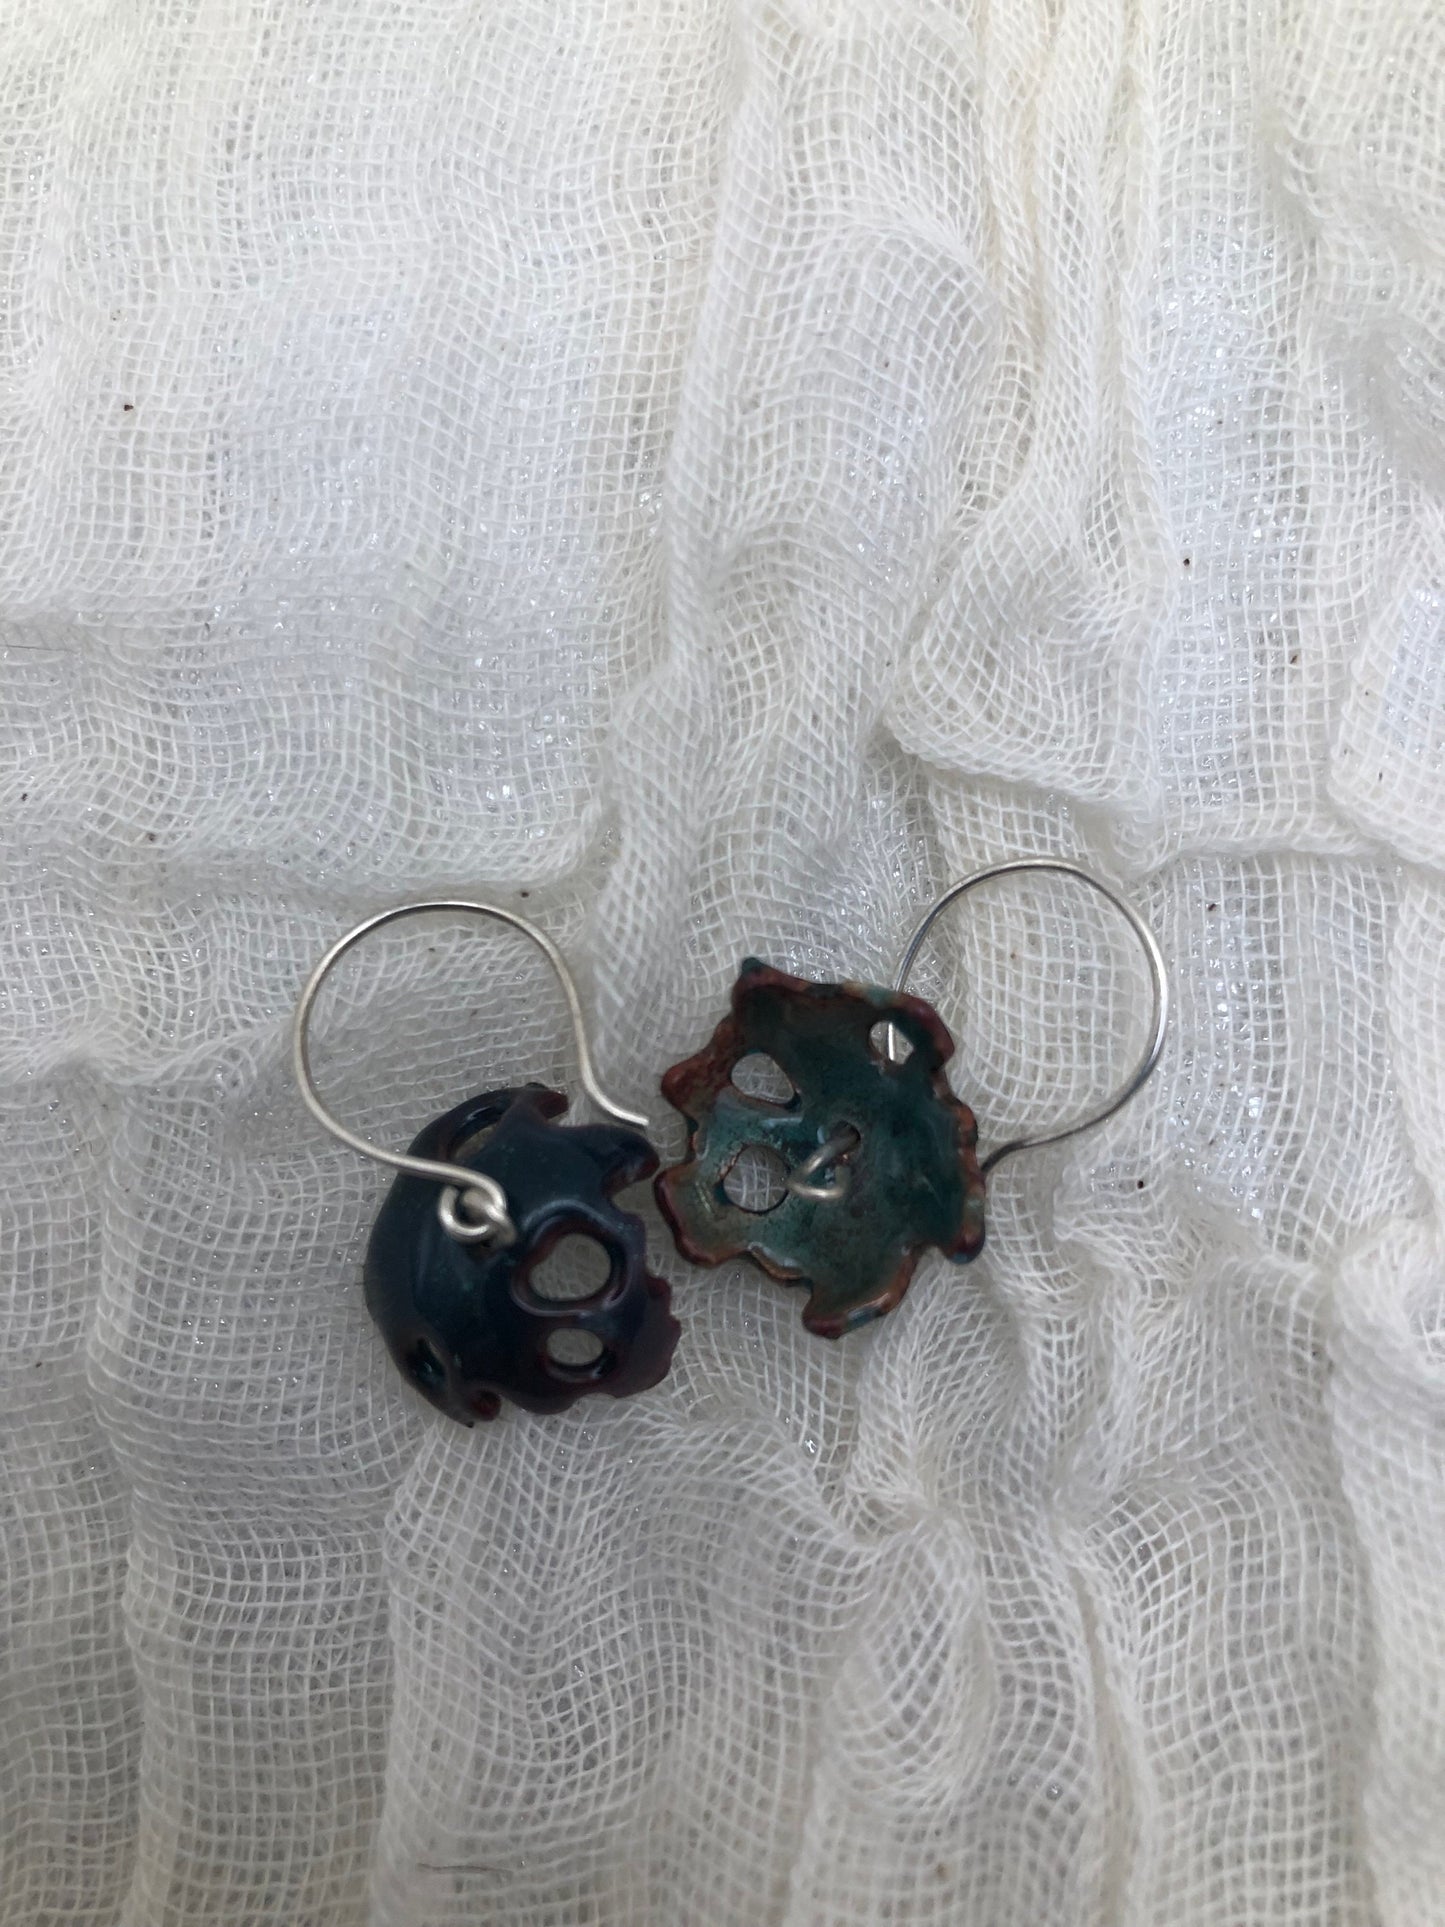 Opalescent green enamel earrings with argentium sterling silver ear wires